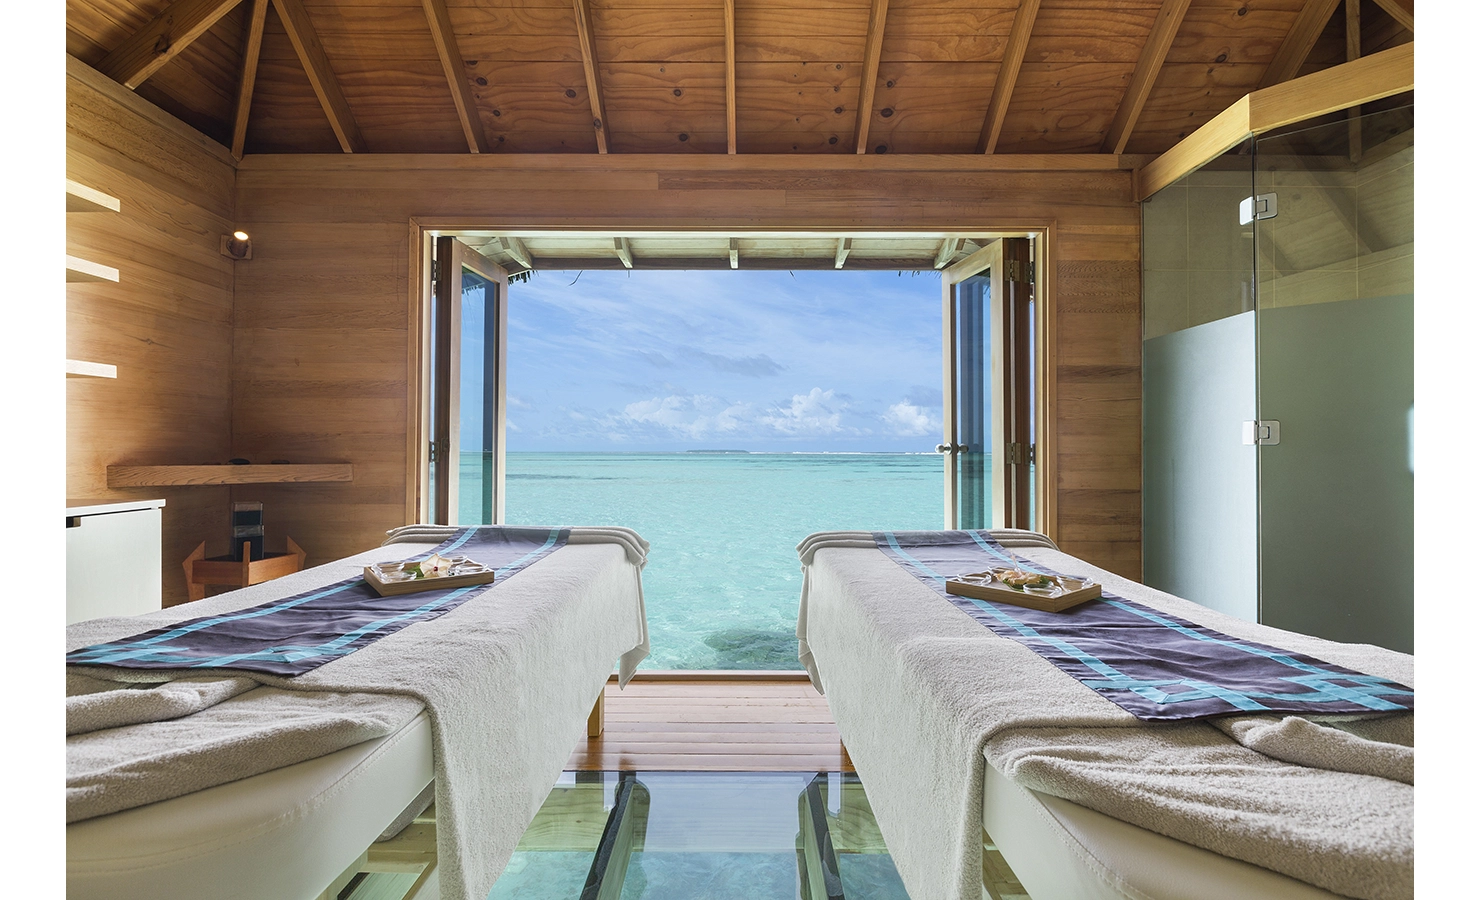 Perfect Hideaways, Conrad Maldives, Massage room looking over the ocean